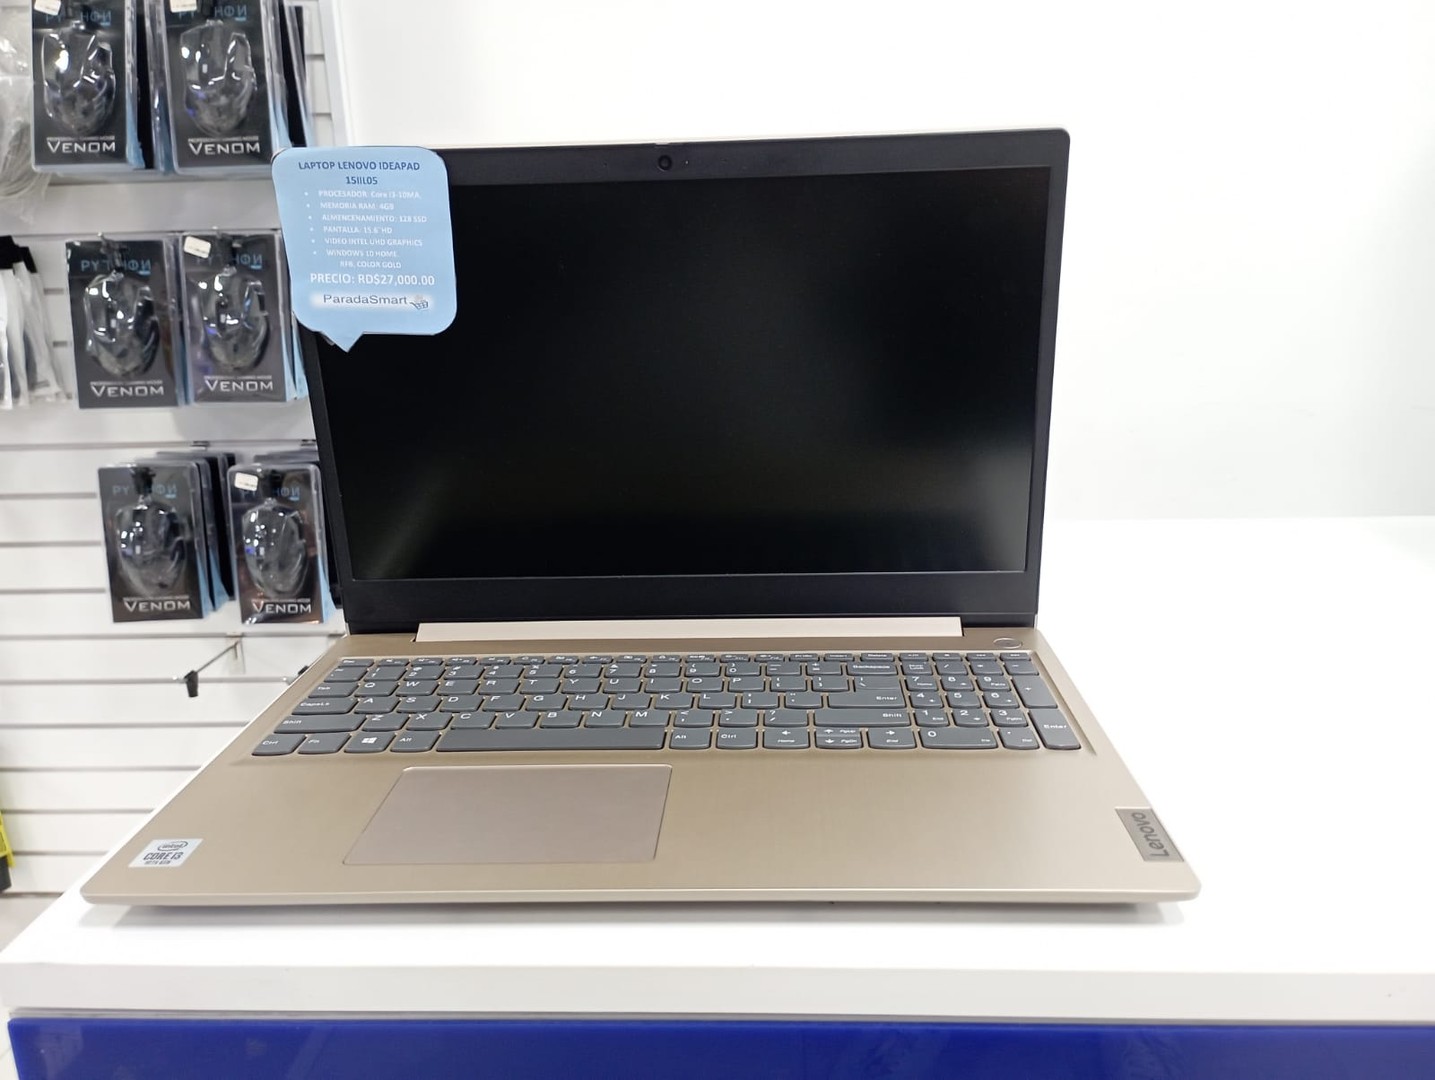 computadoras y laptops - Laptop Lenovo Idea pad 15IIL05 core i3-10ma 4gb Ram, 128gb ssd, Pantalla 15.6 0